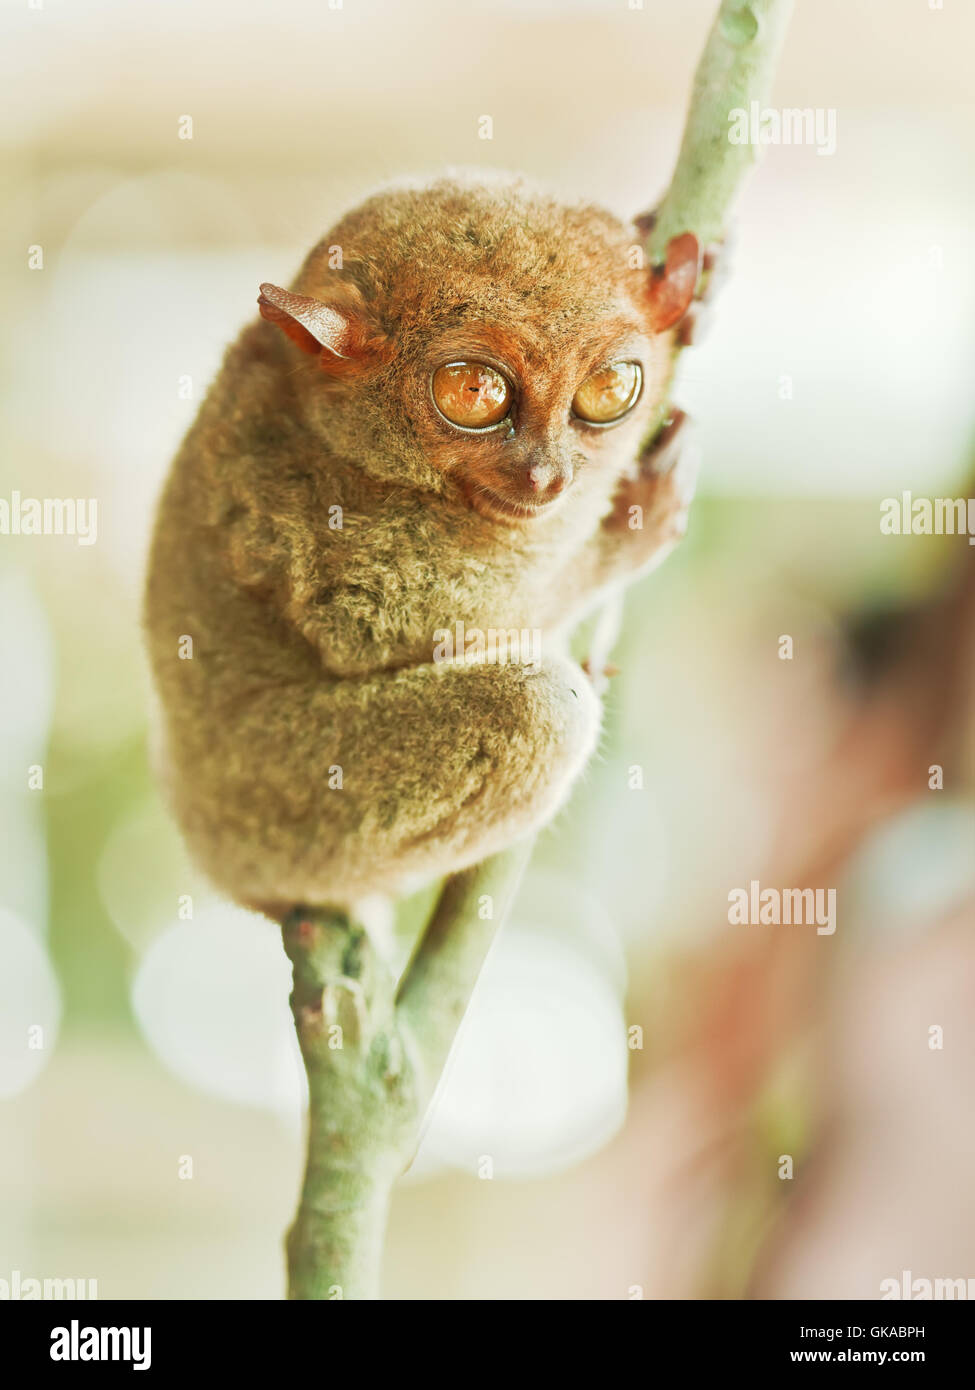 Big eyed monkey hi-res stock photography and images - Alamy